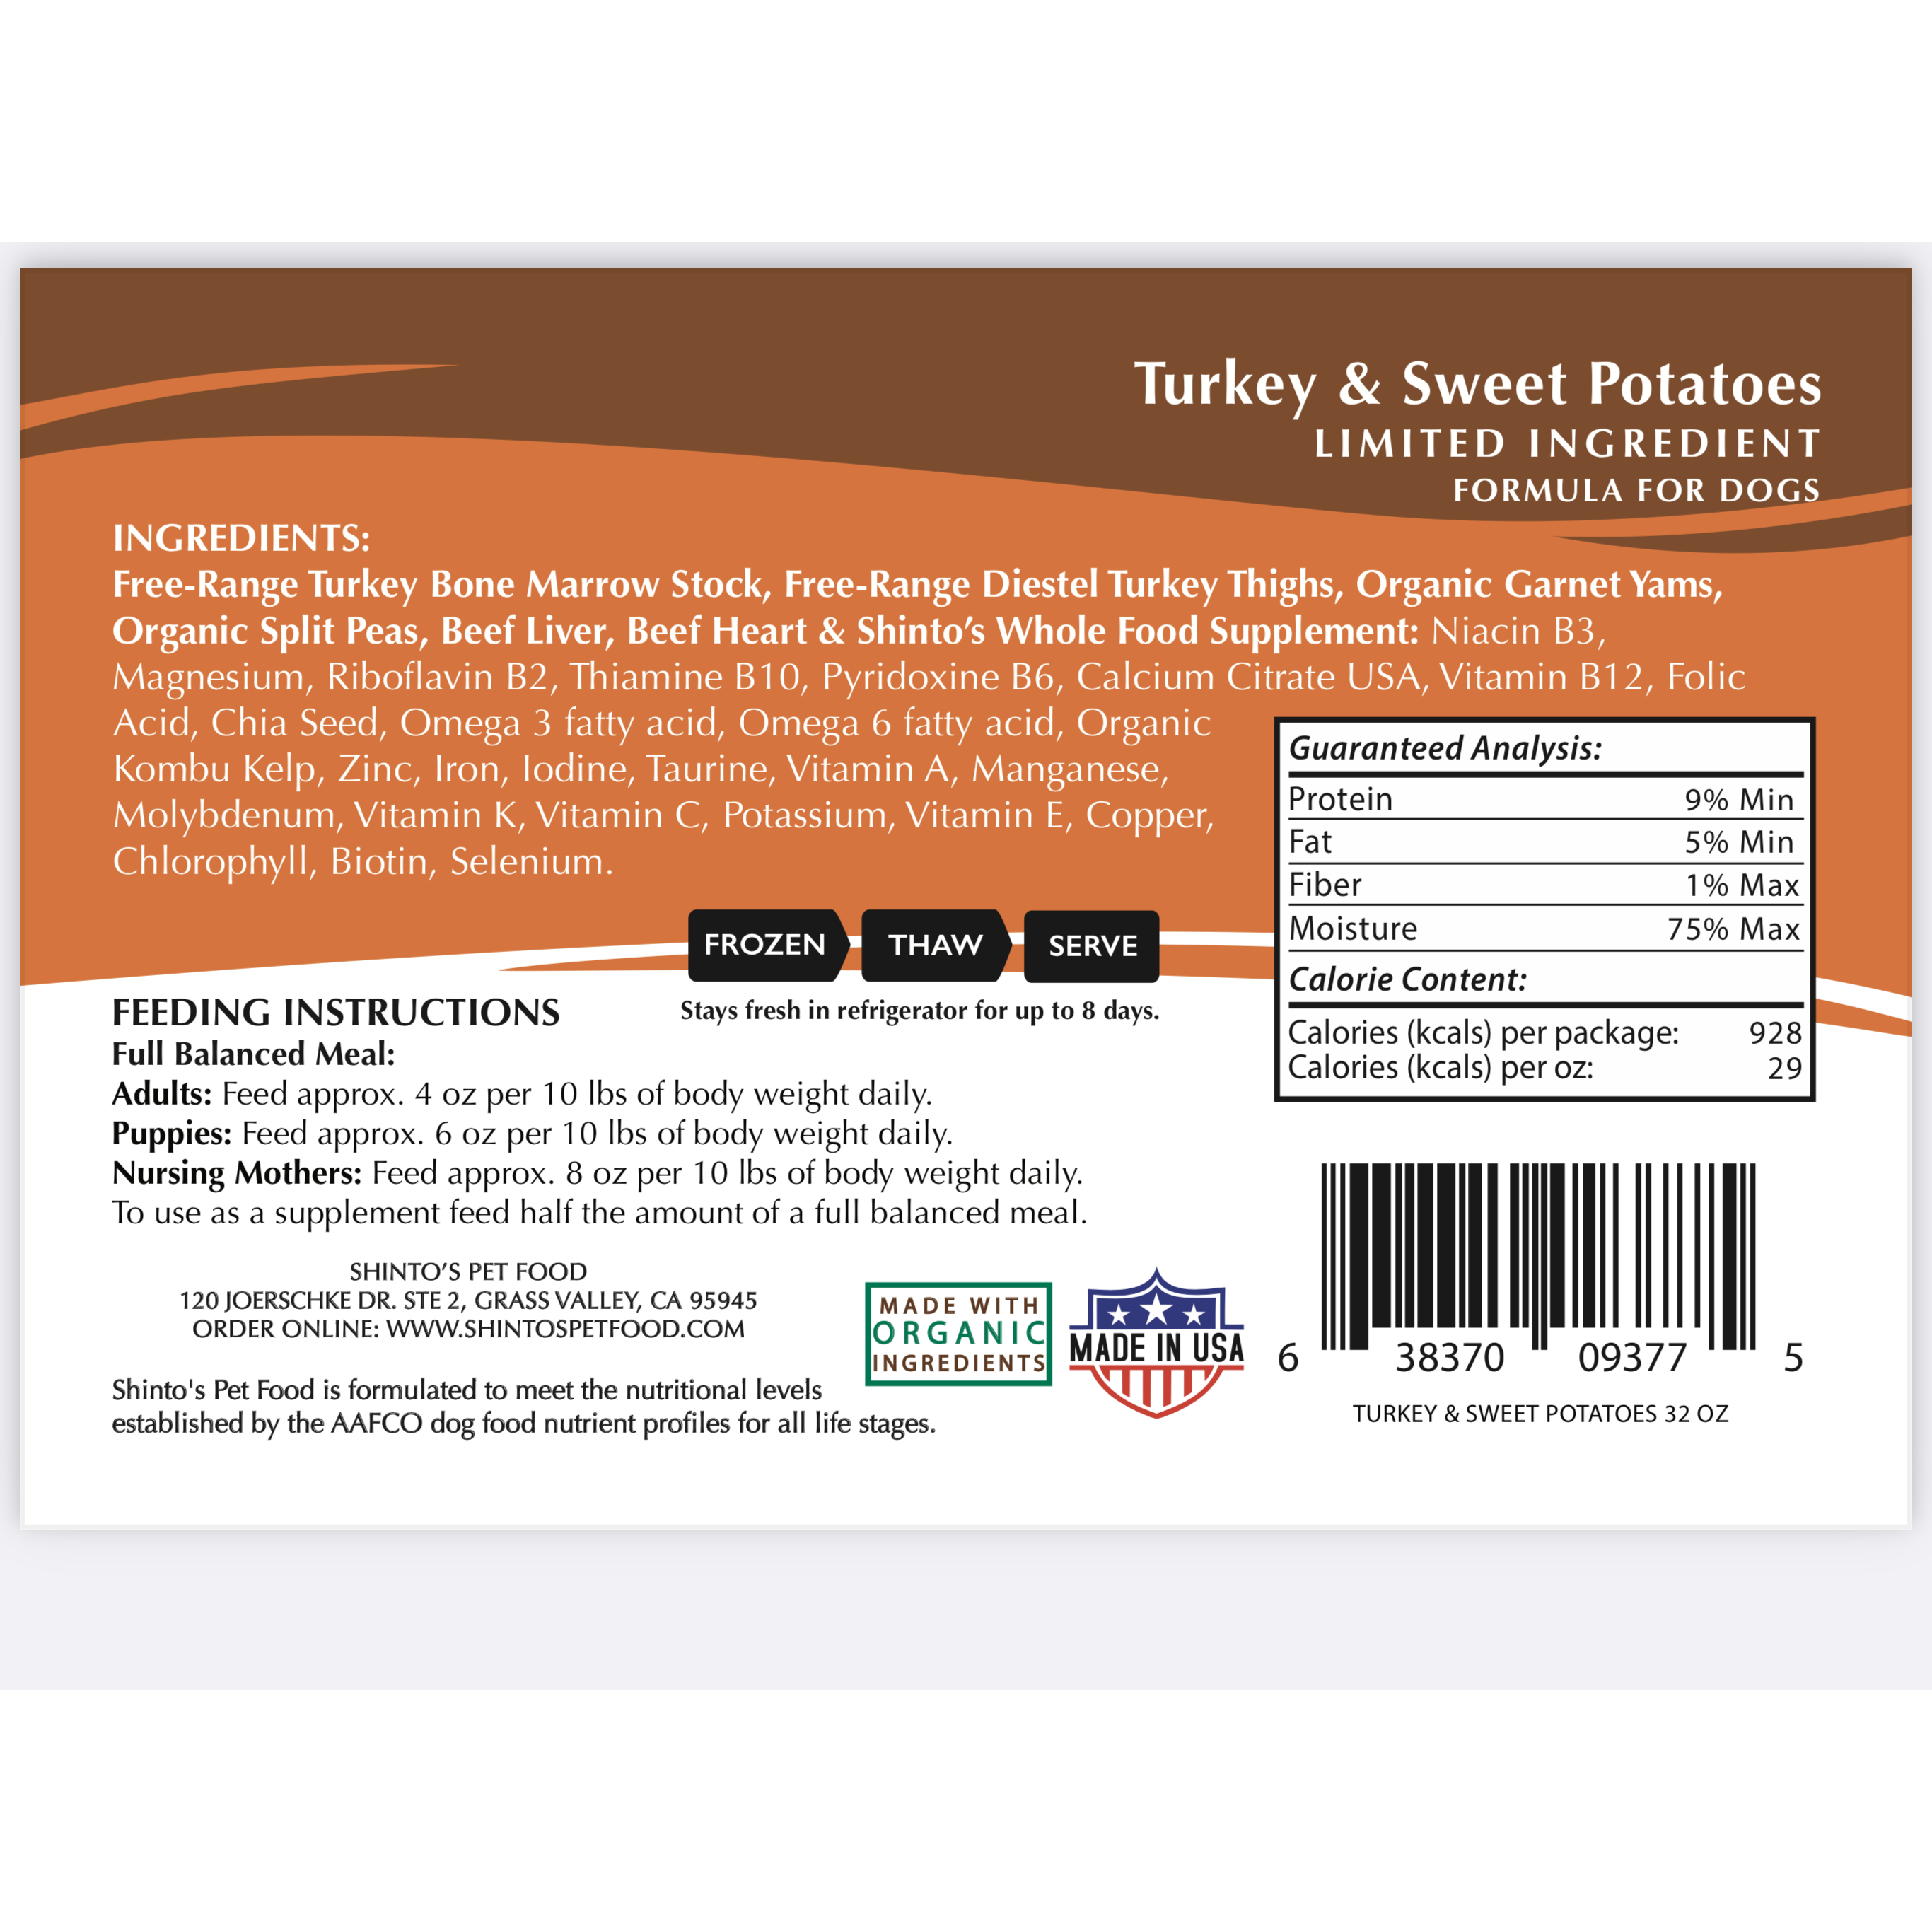 Turkey & Sweet Potatoes Formula